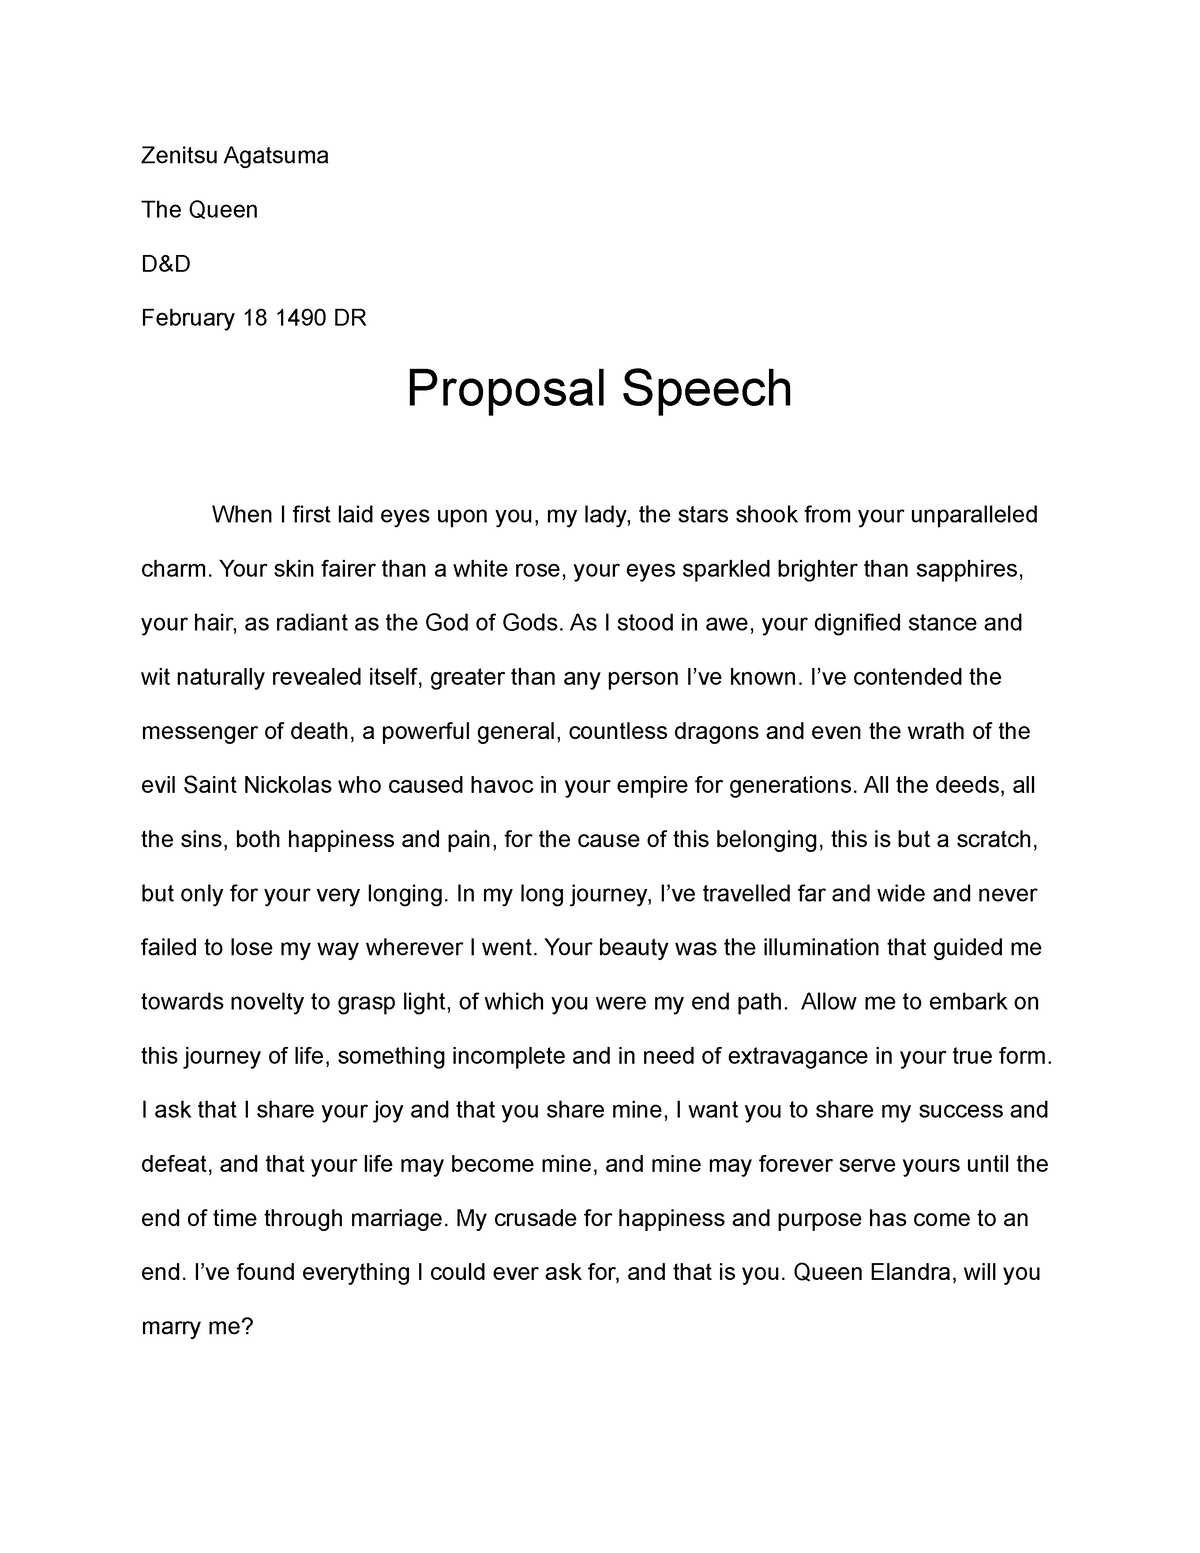 proposal speech tagalog